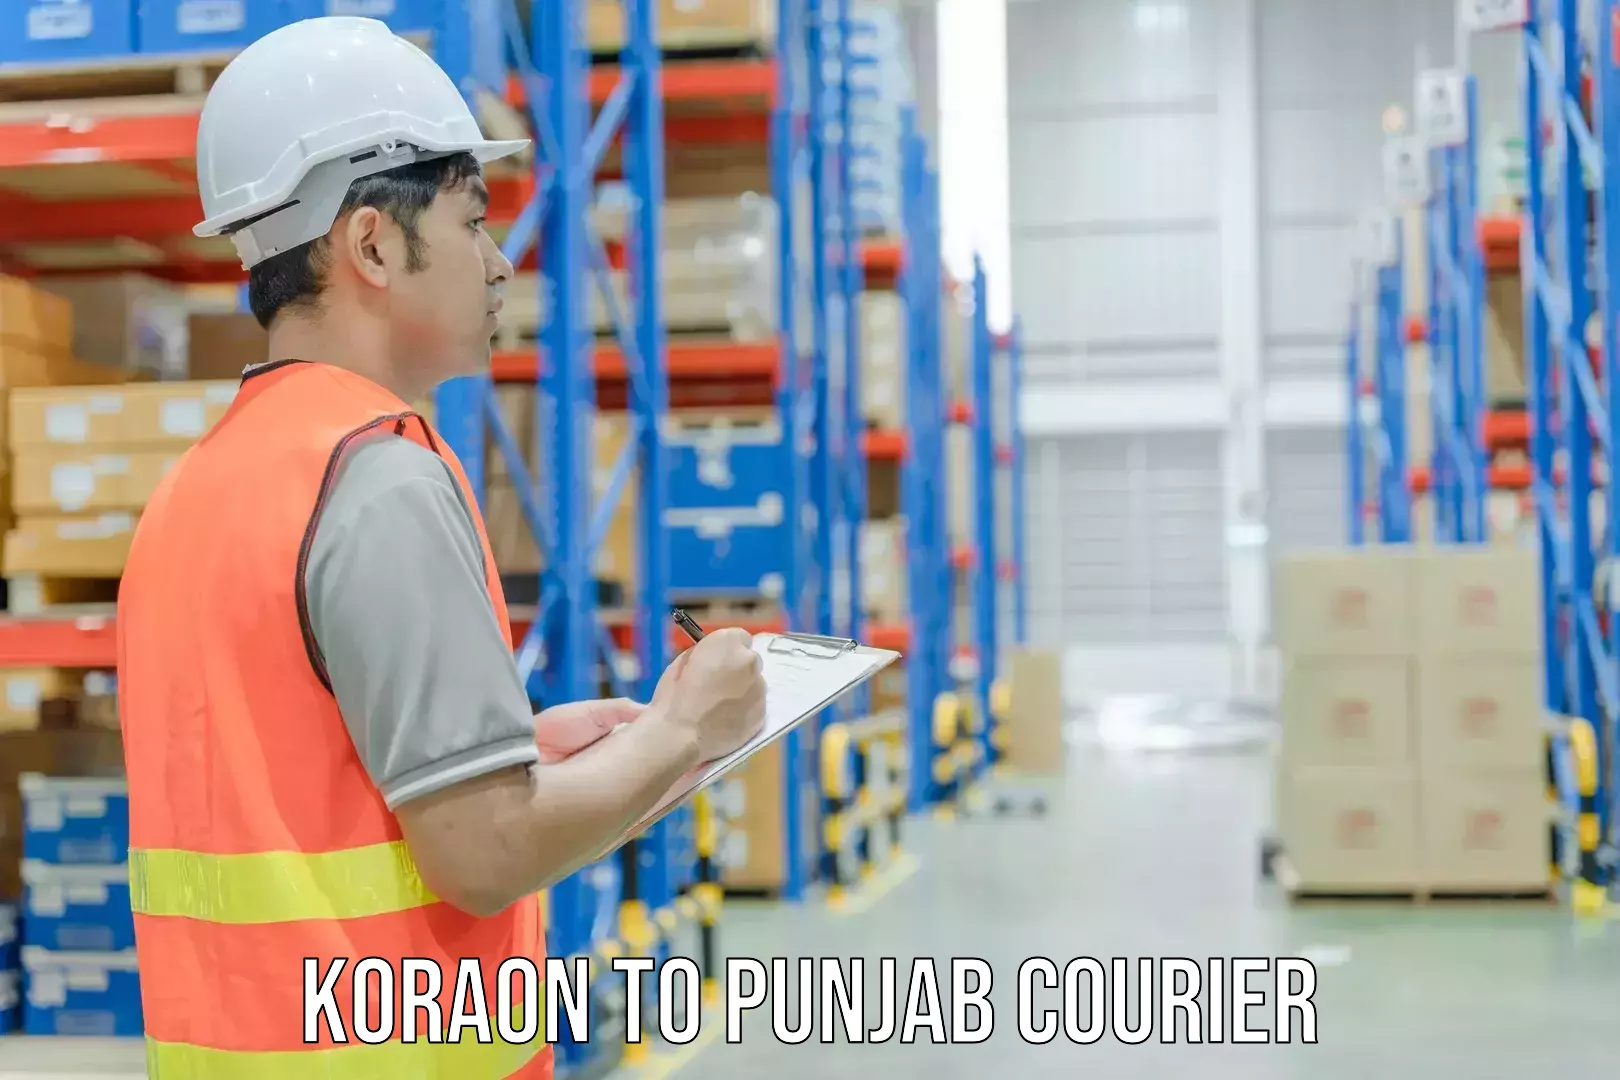 User-friendly delivery service Koraon to Punjab